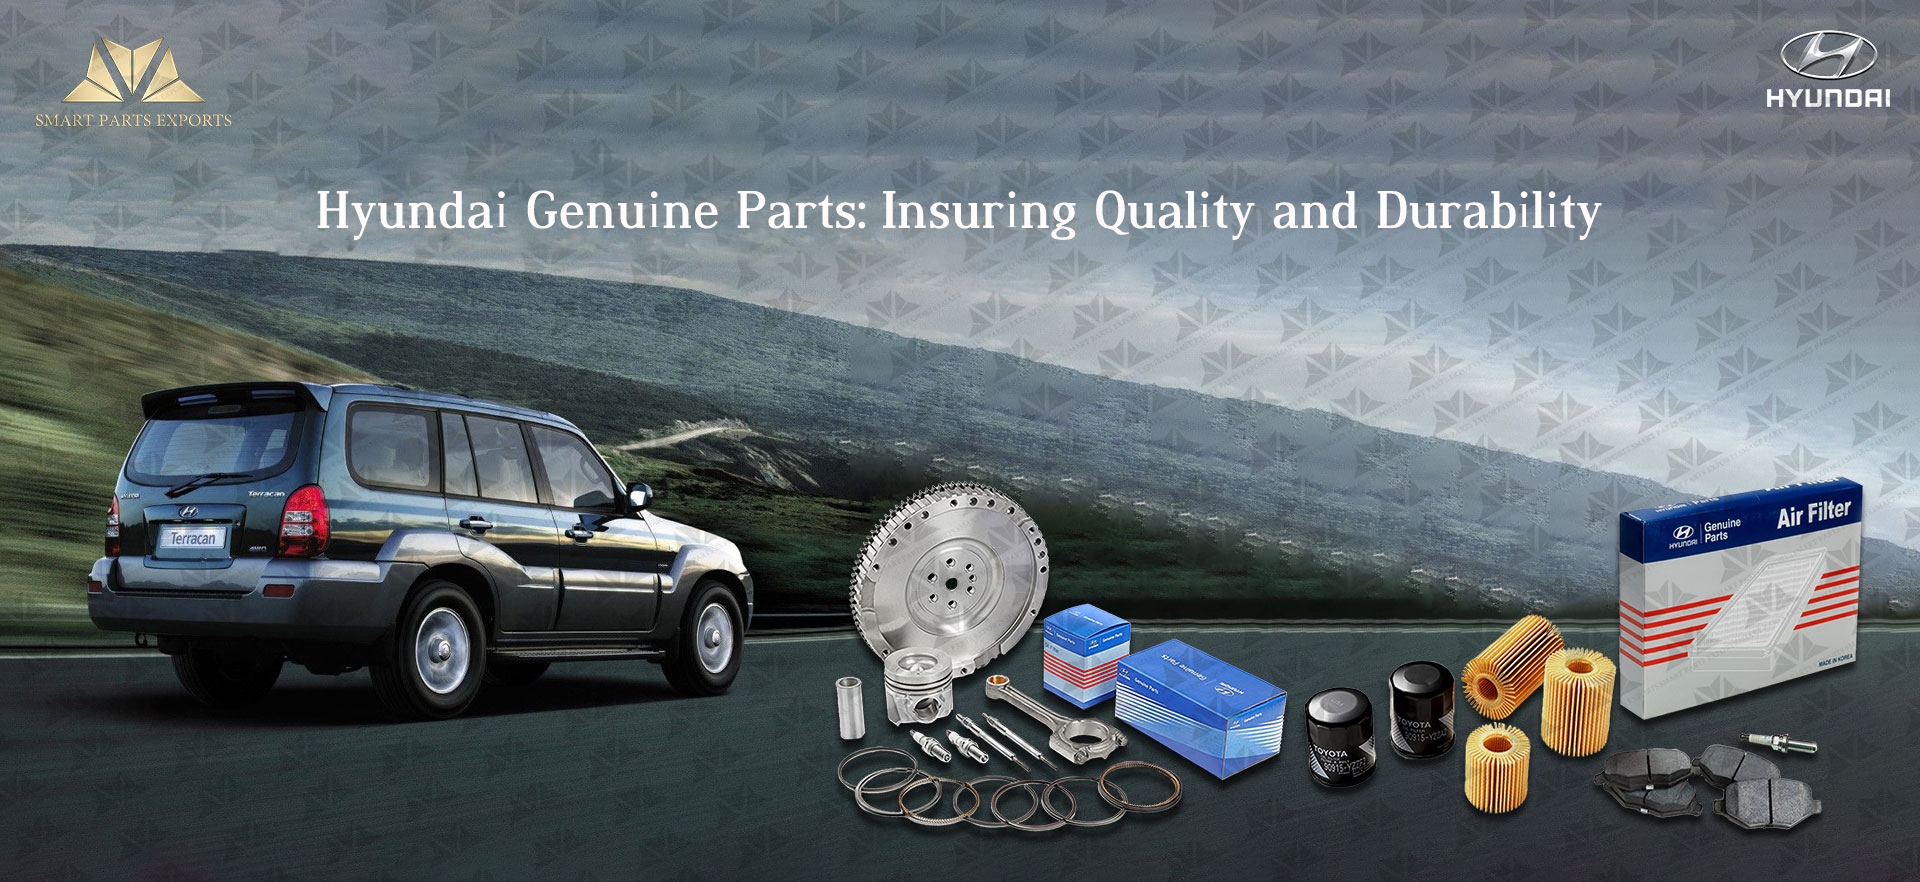 Hyundai Genuine Parts: Insuring Quality and Durability